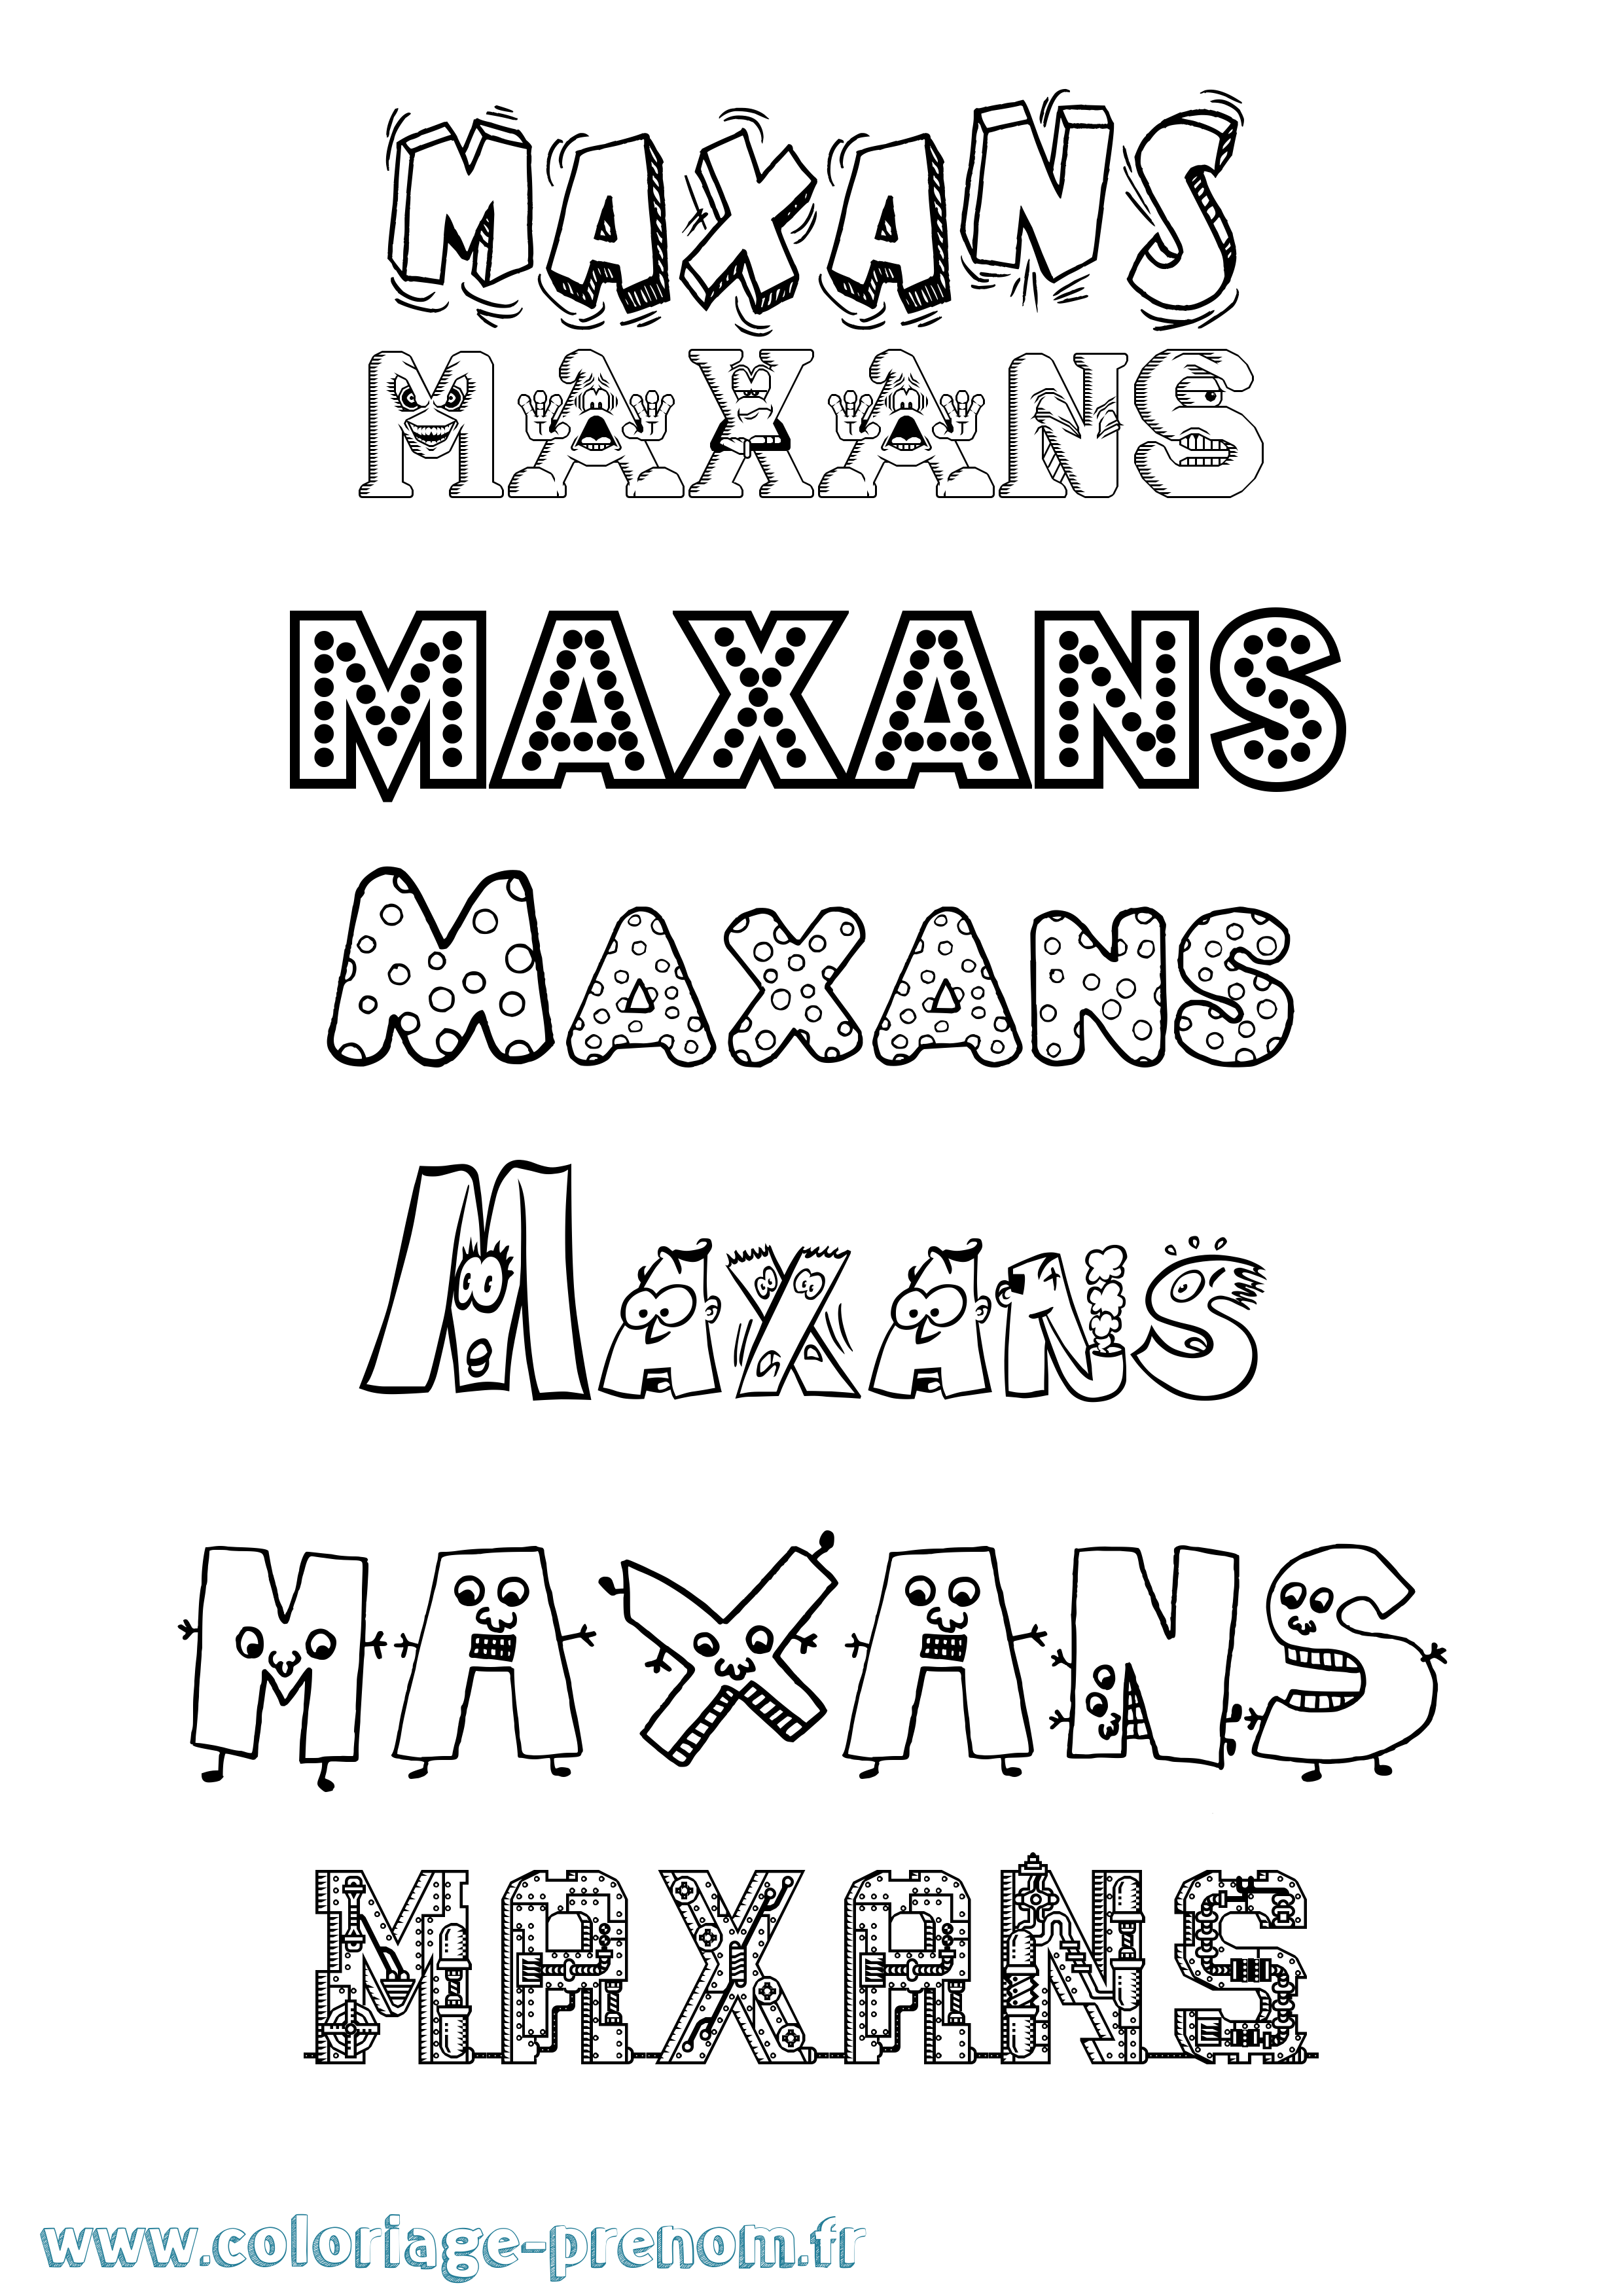 Coloriage prénom Maxans Fun